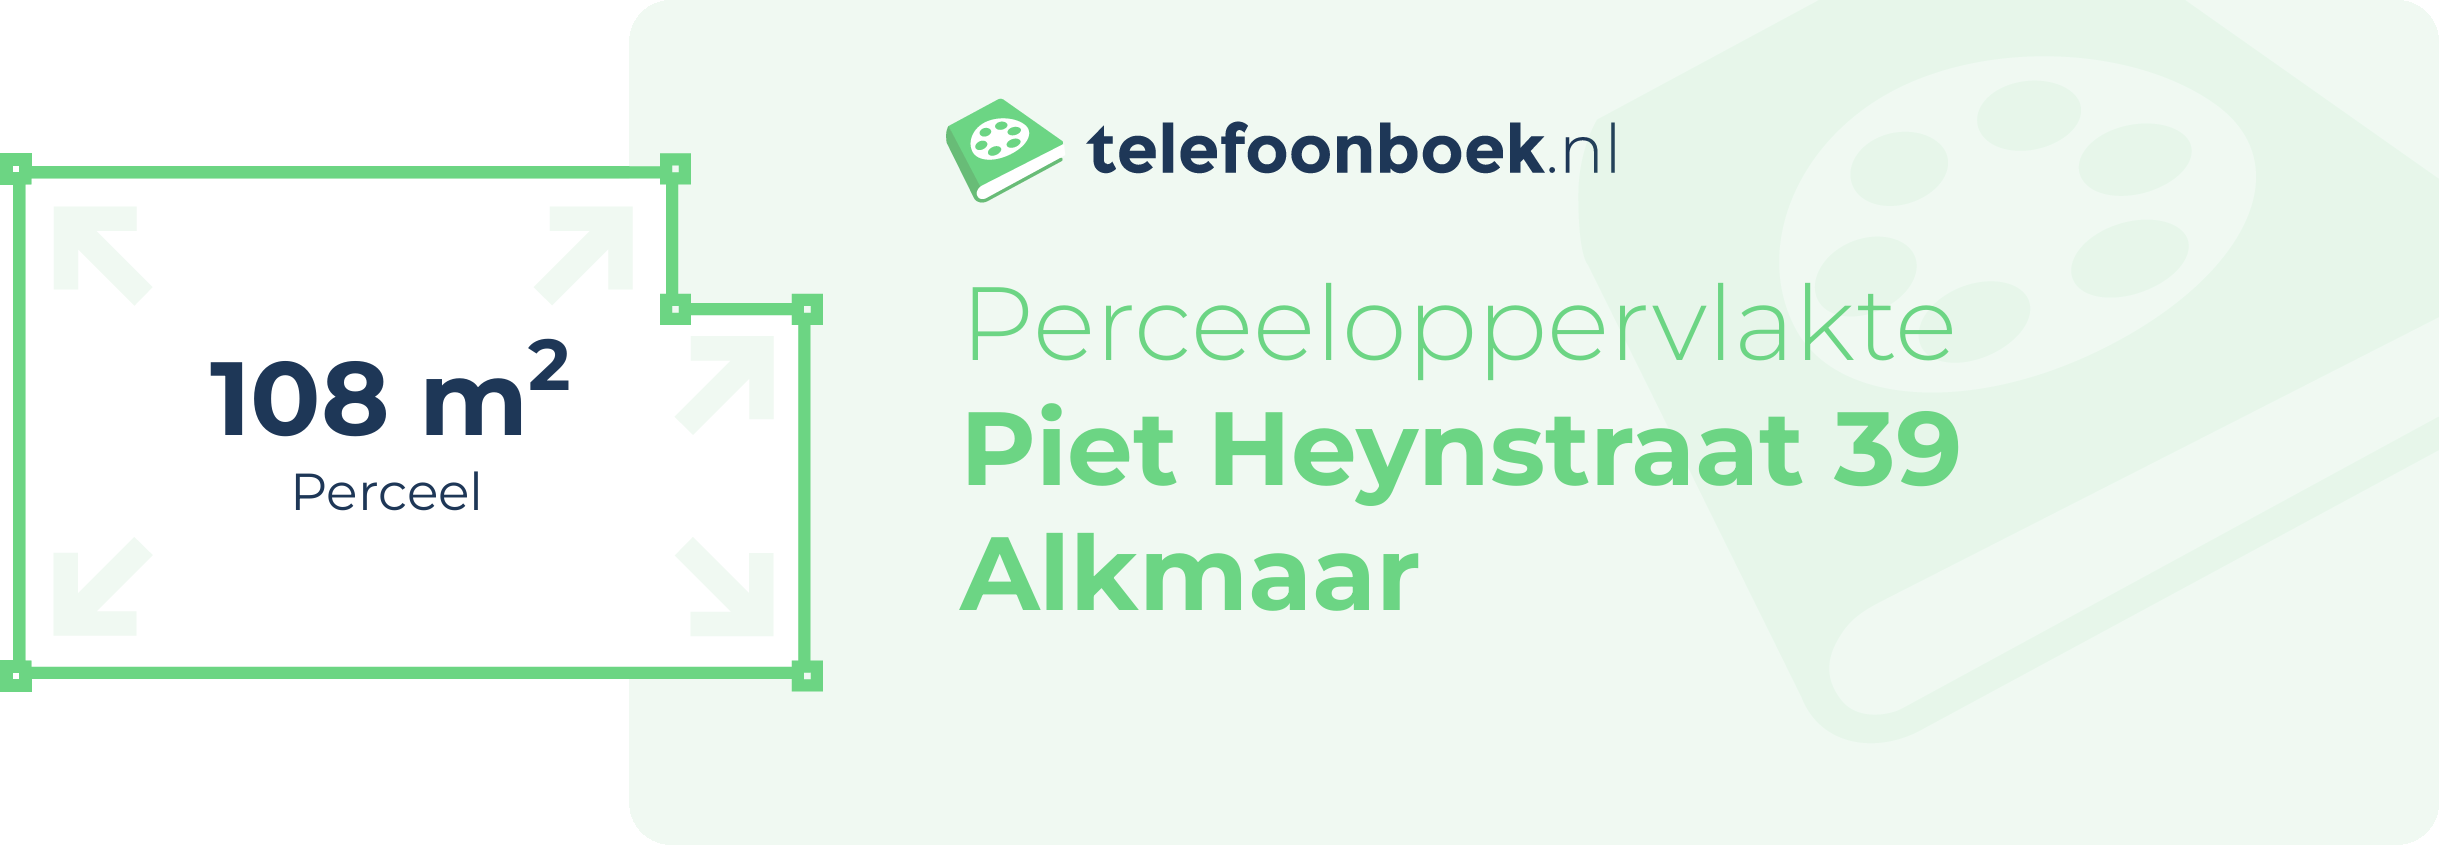 Perceeloppervlakte Piet Heynstraat 39 Alkmaar